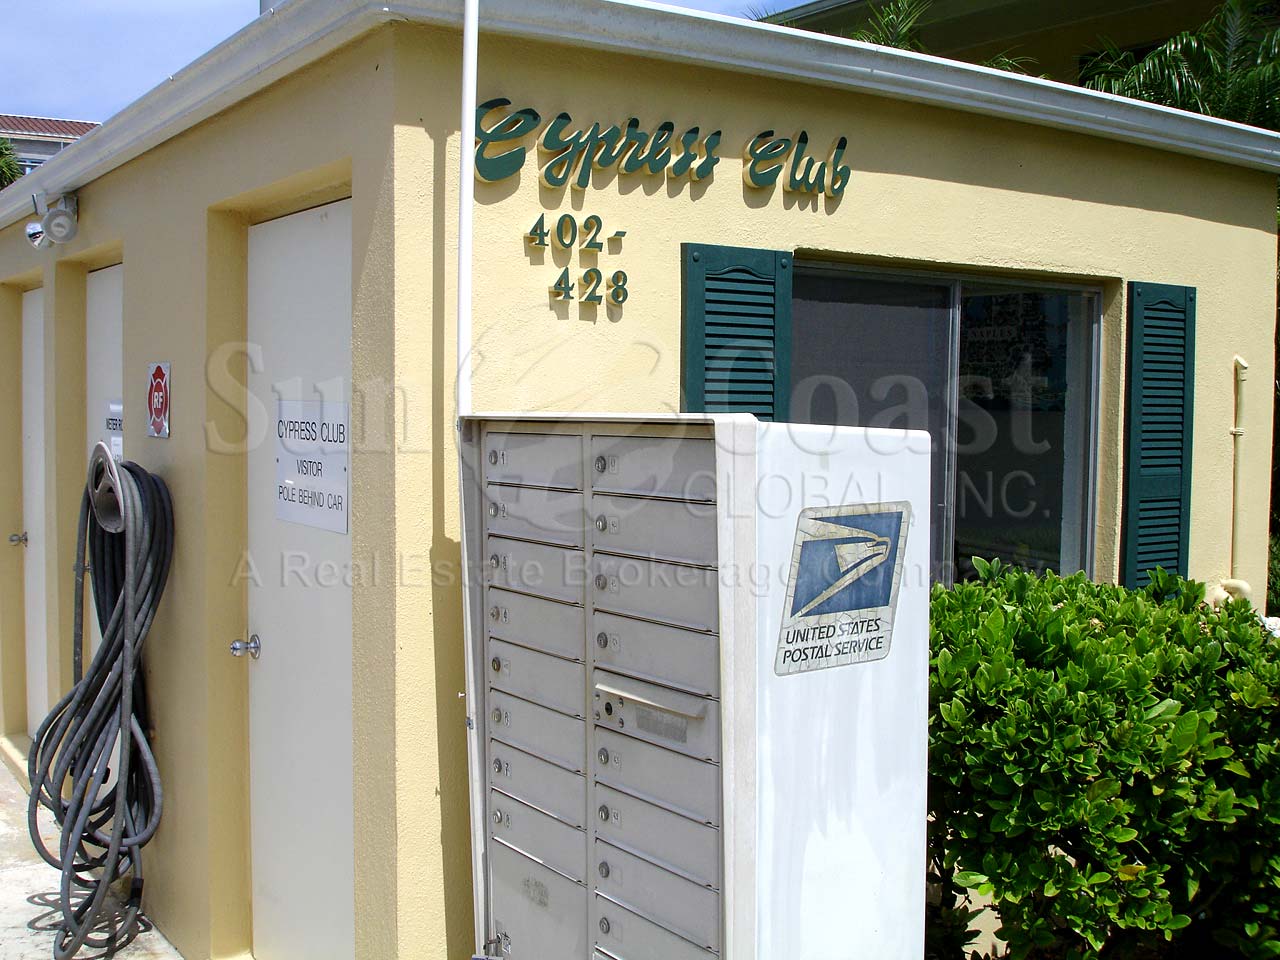 Cypress Club Mail and Storage